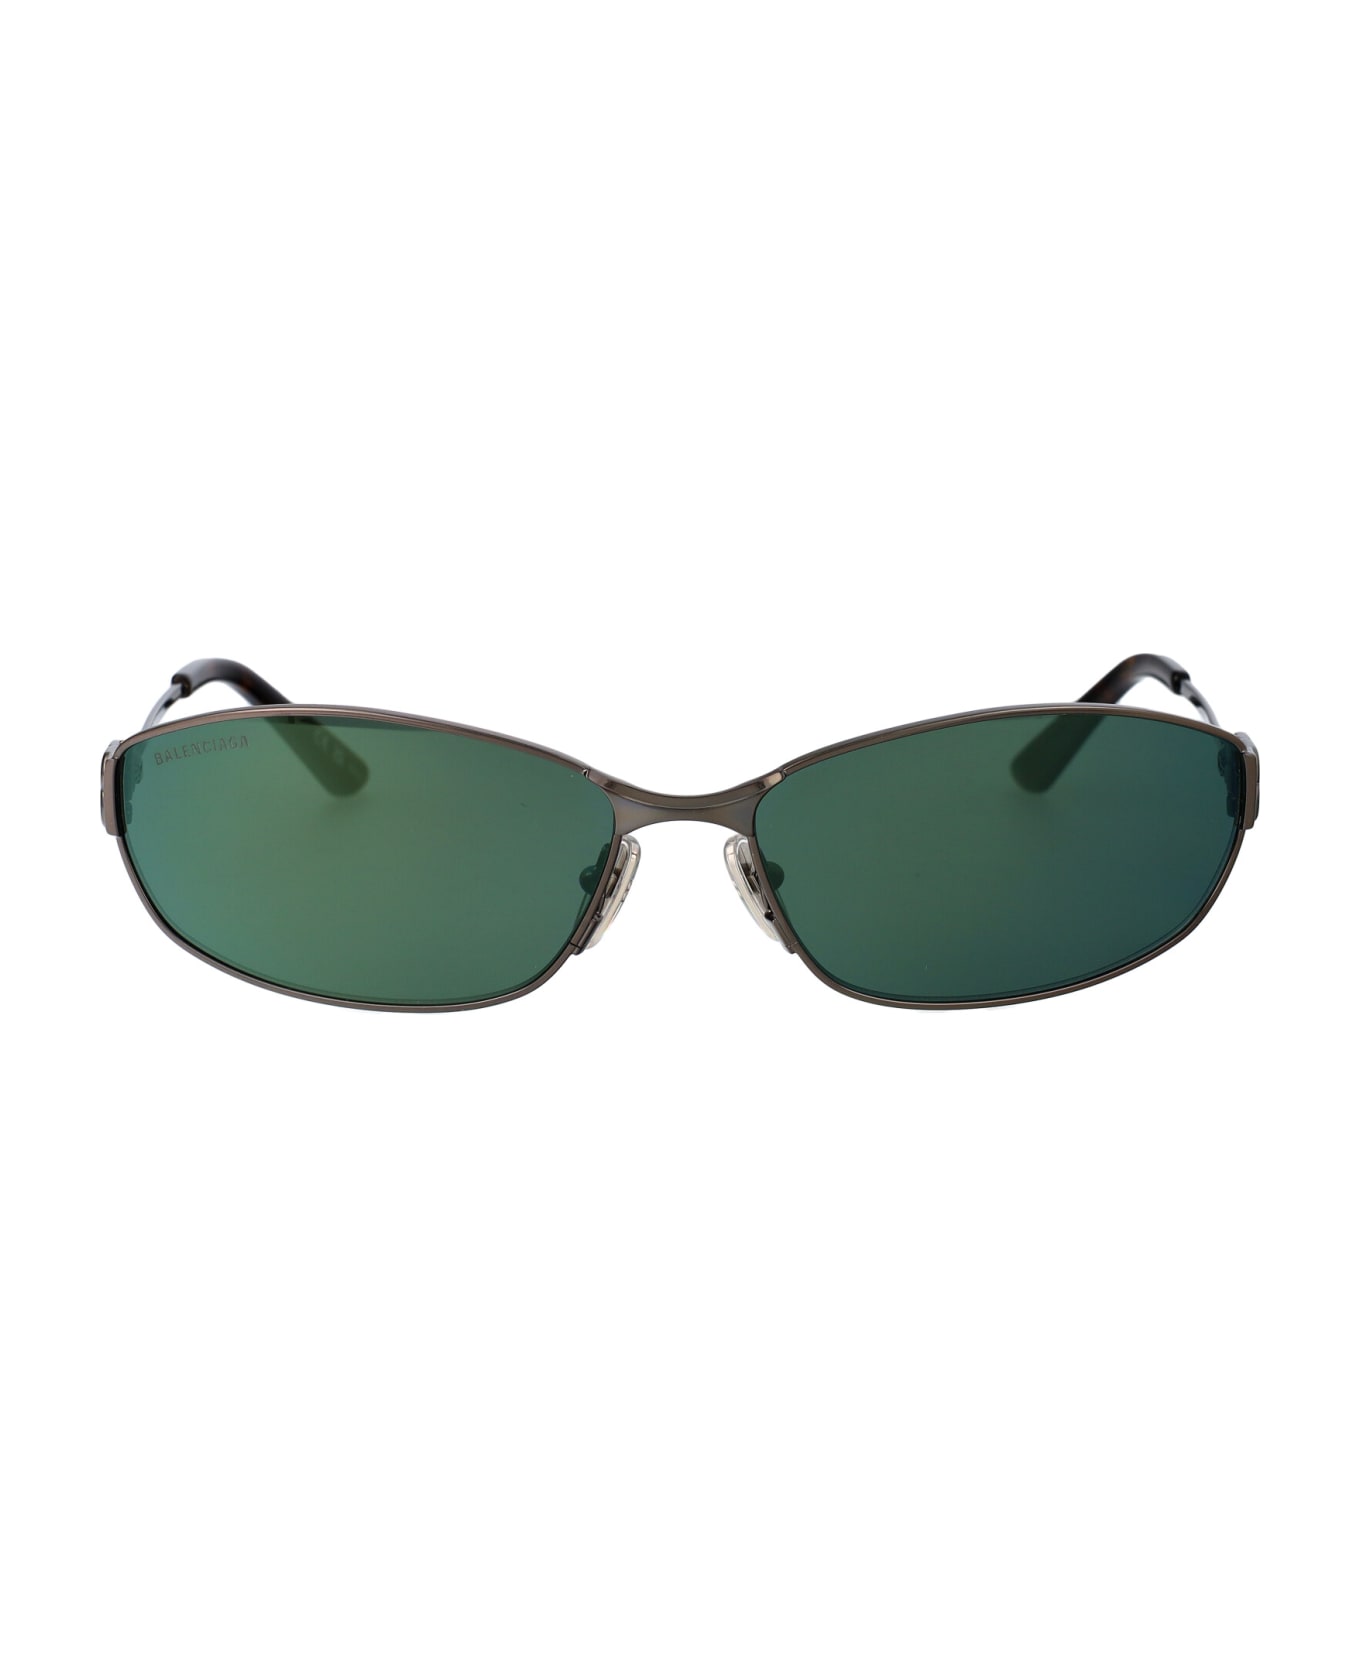 Balenciaga Eyewear Bb0336s Sunglasses - 005 GREY GREY GREEN